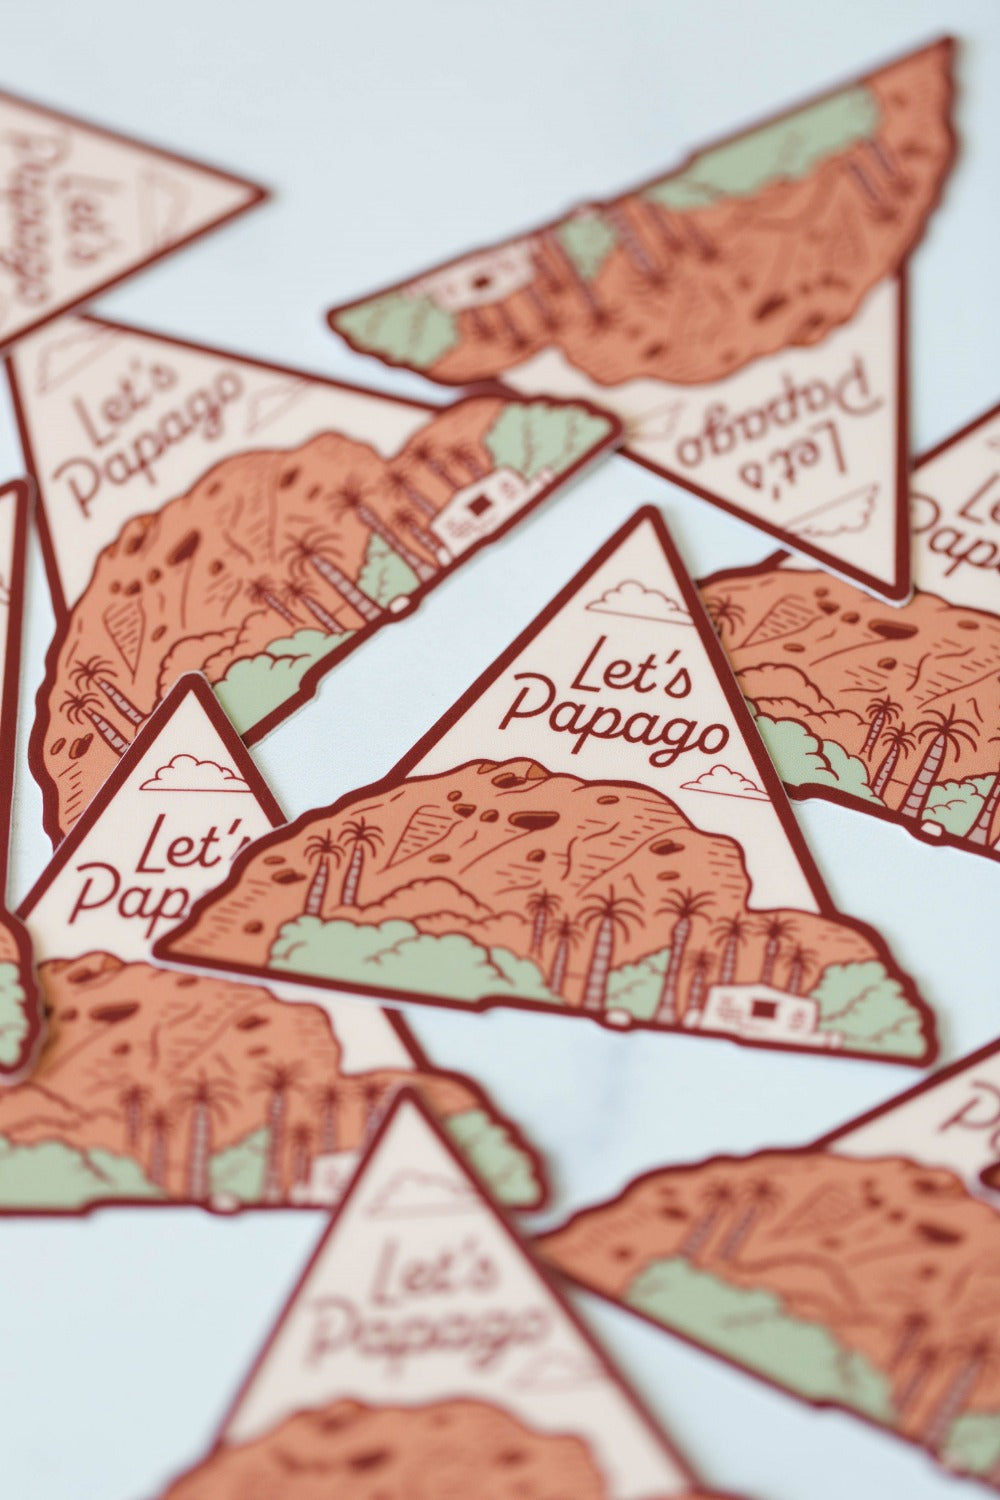 Let's Papago Vinyl Sticker